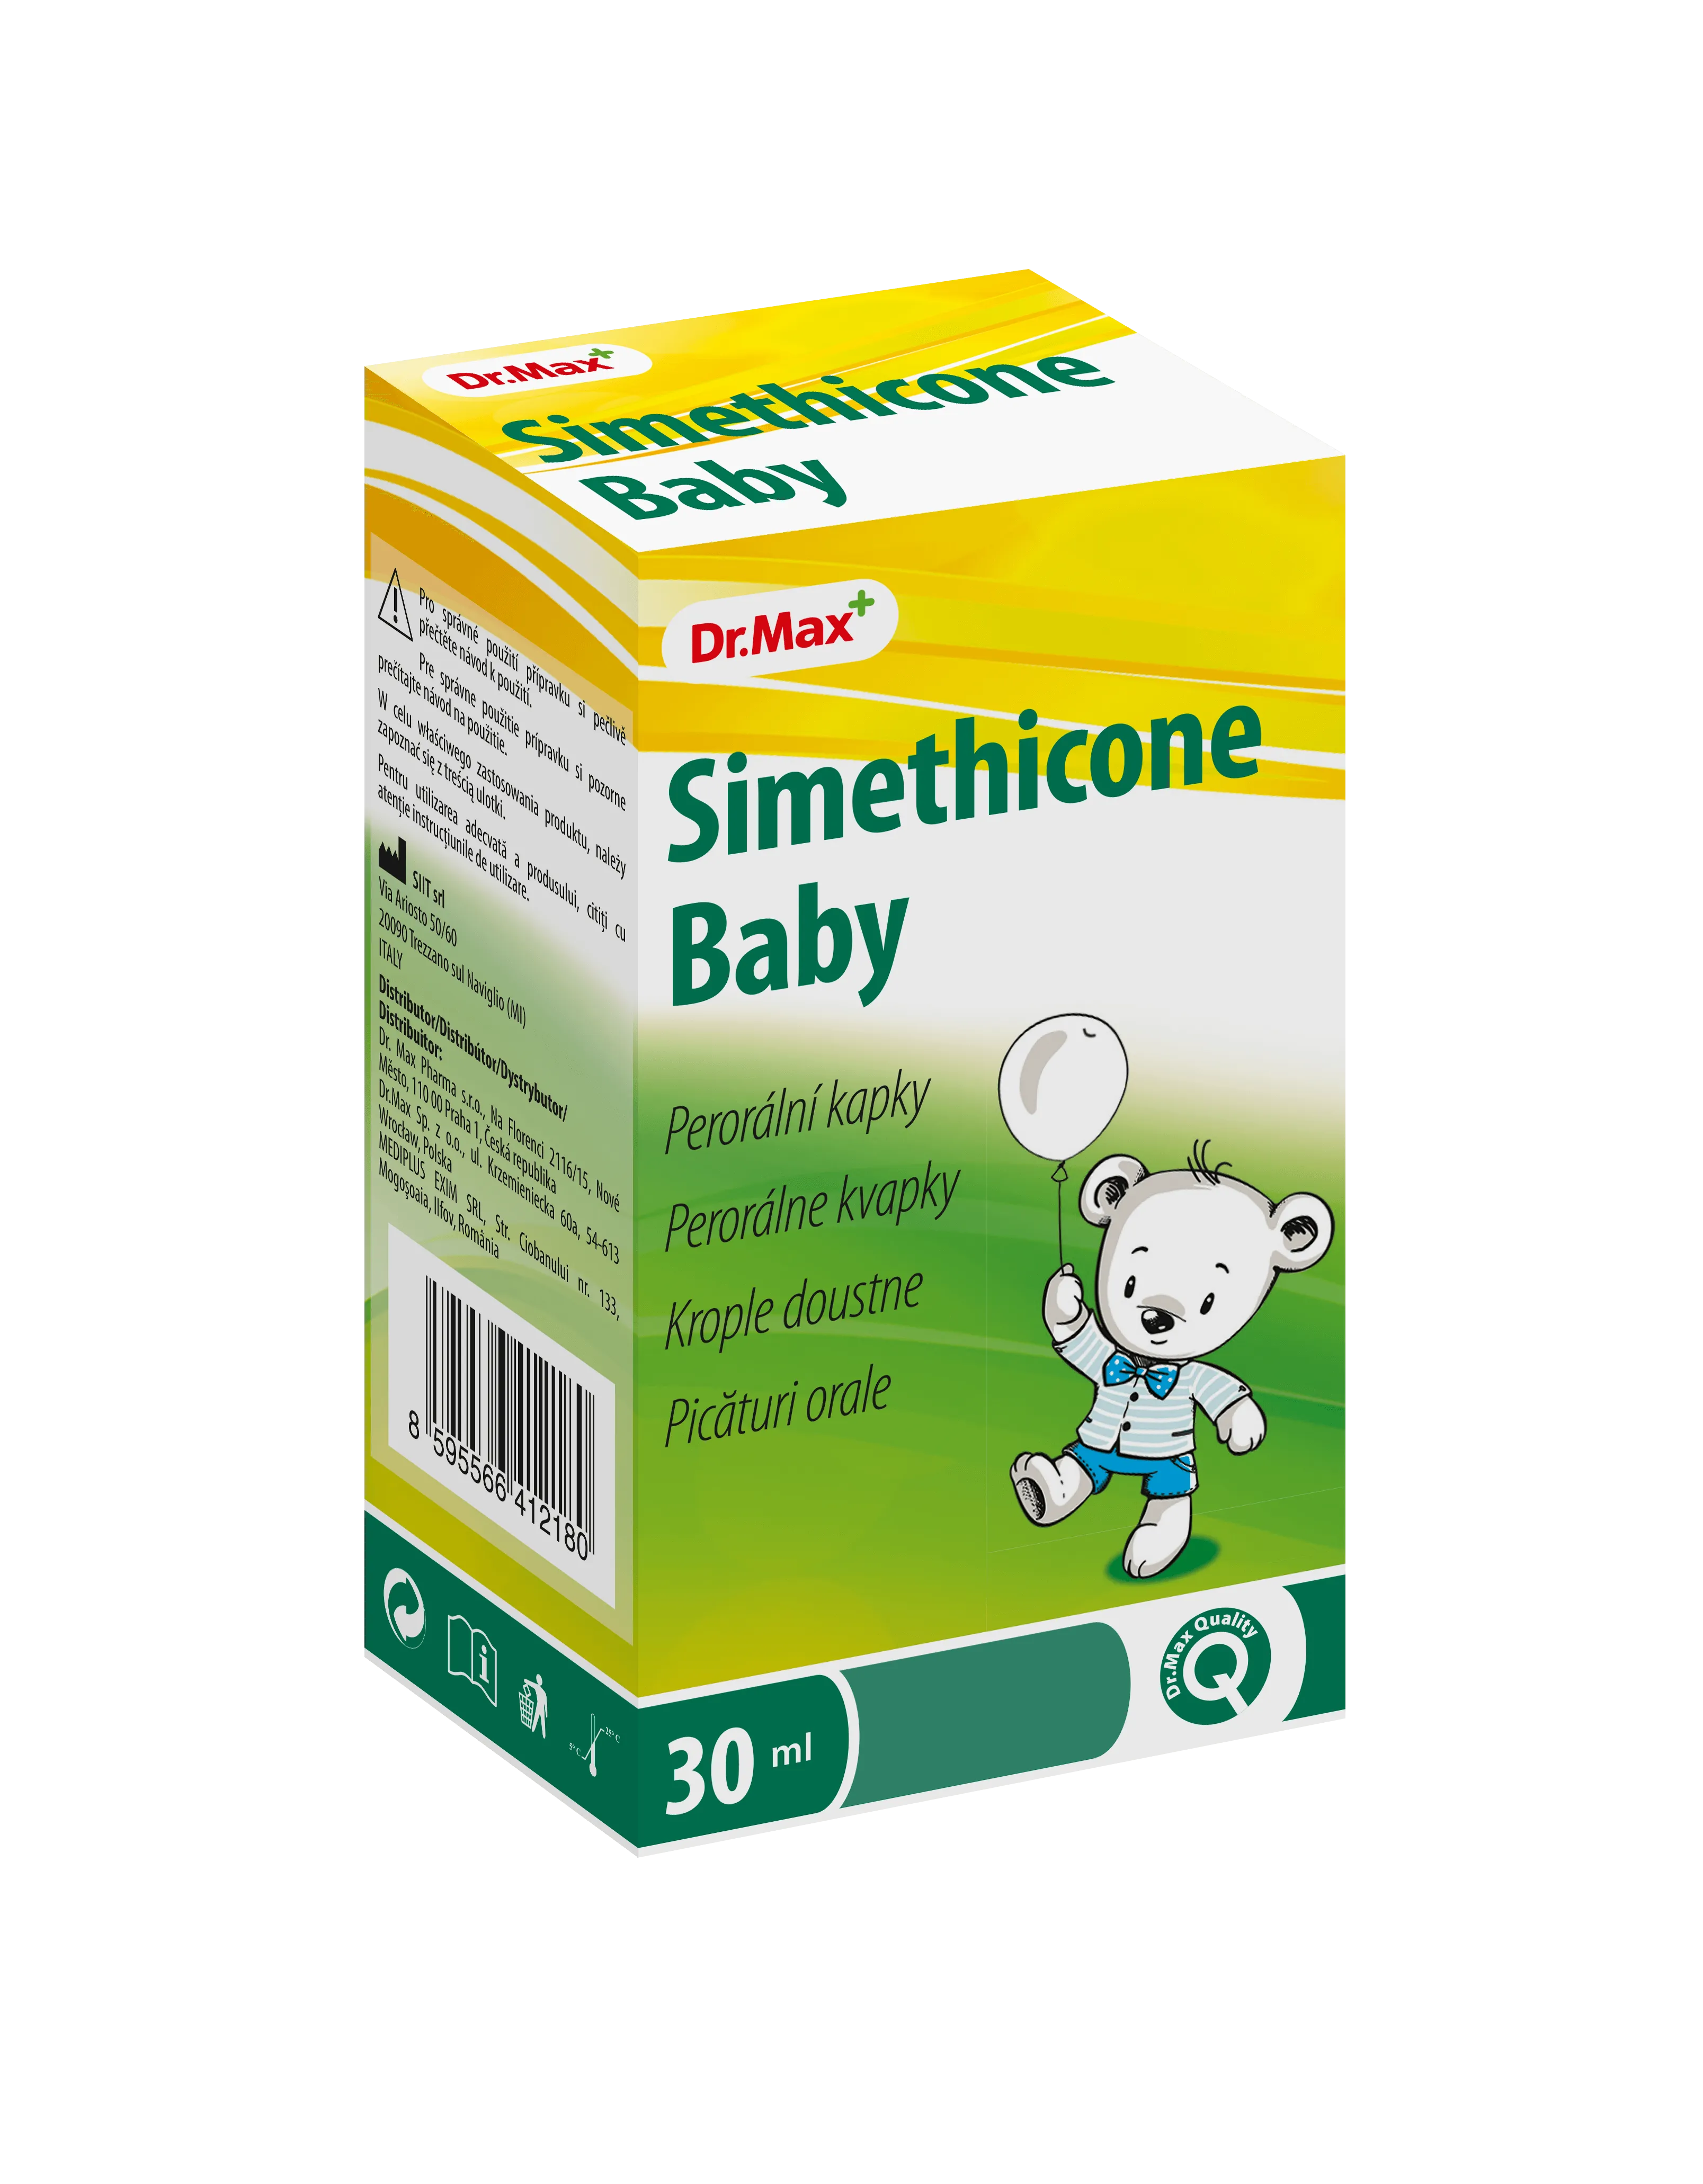 Simethicone Baby Dr.Max, krople doustne, 30 ml